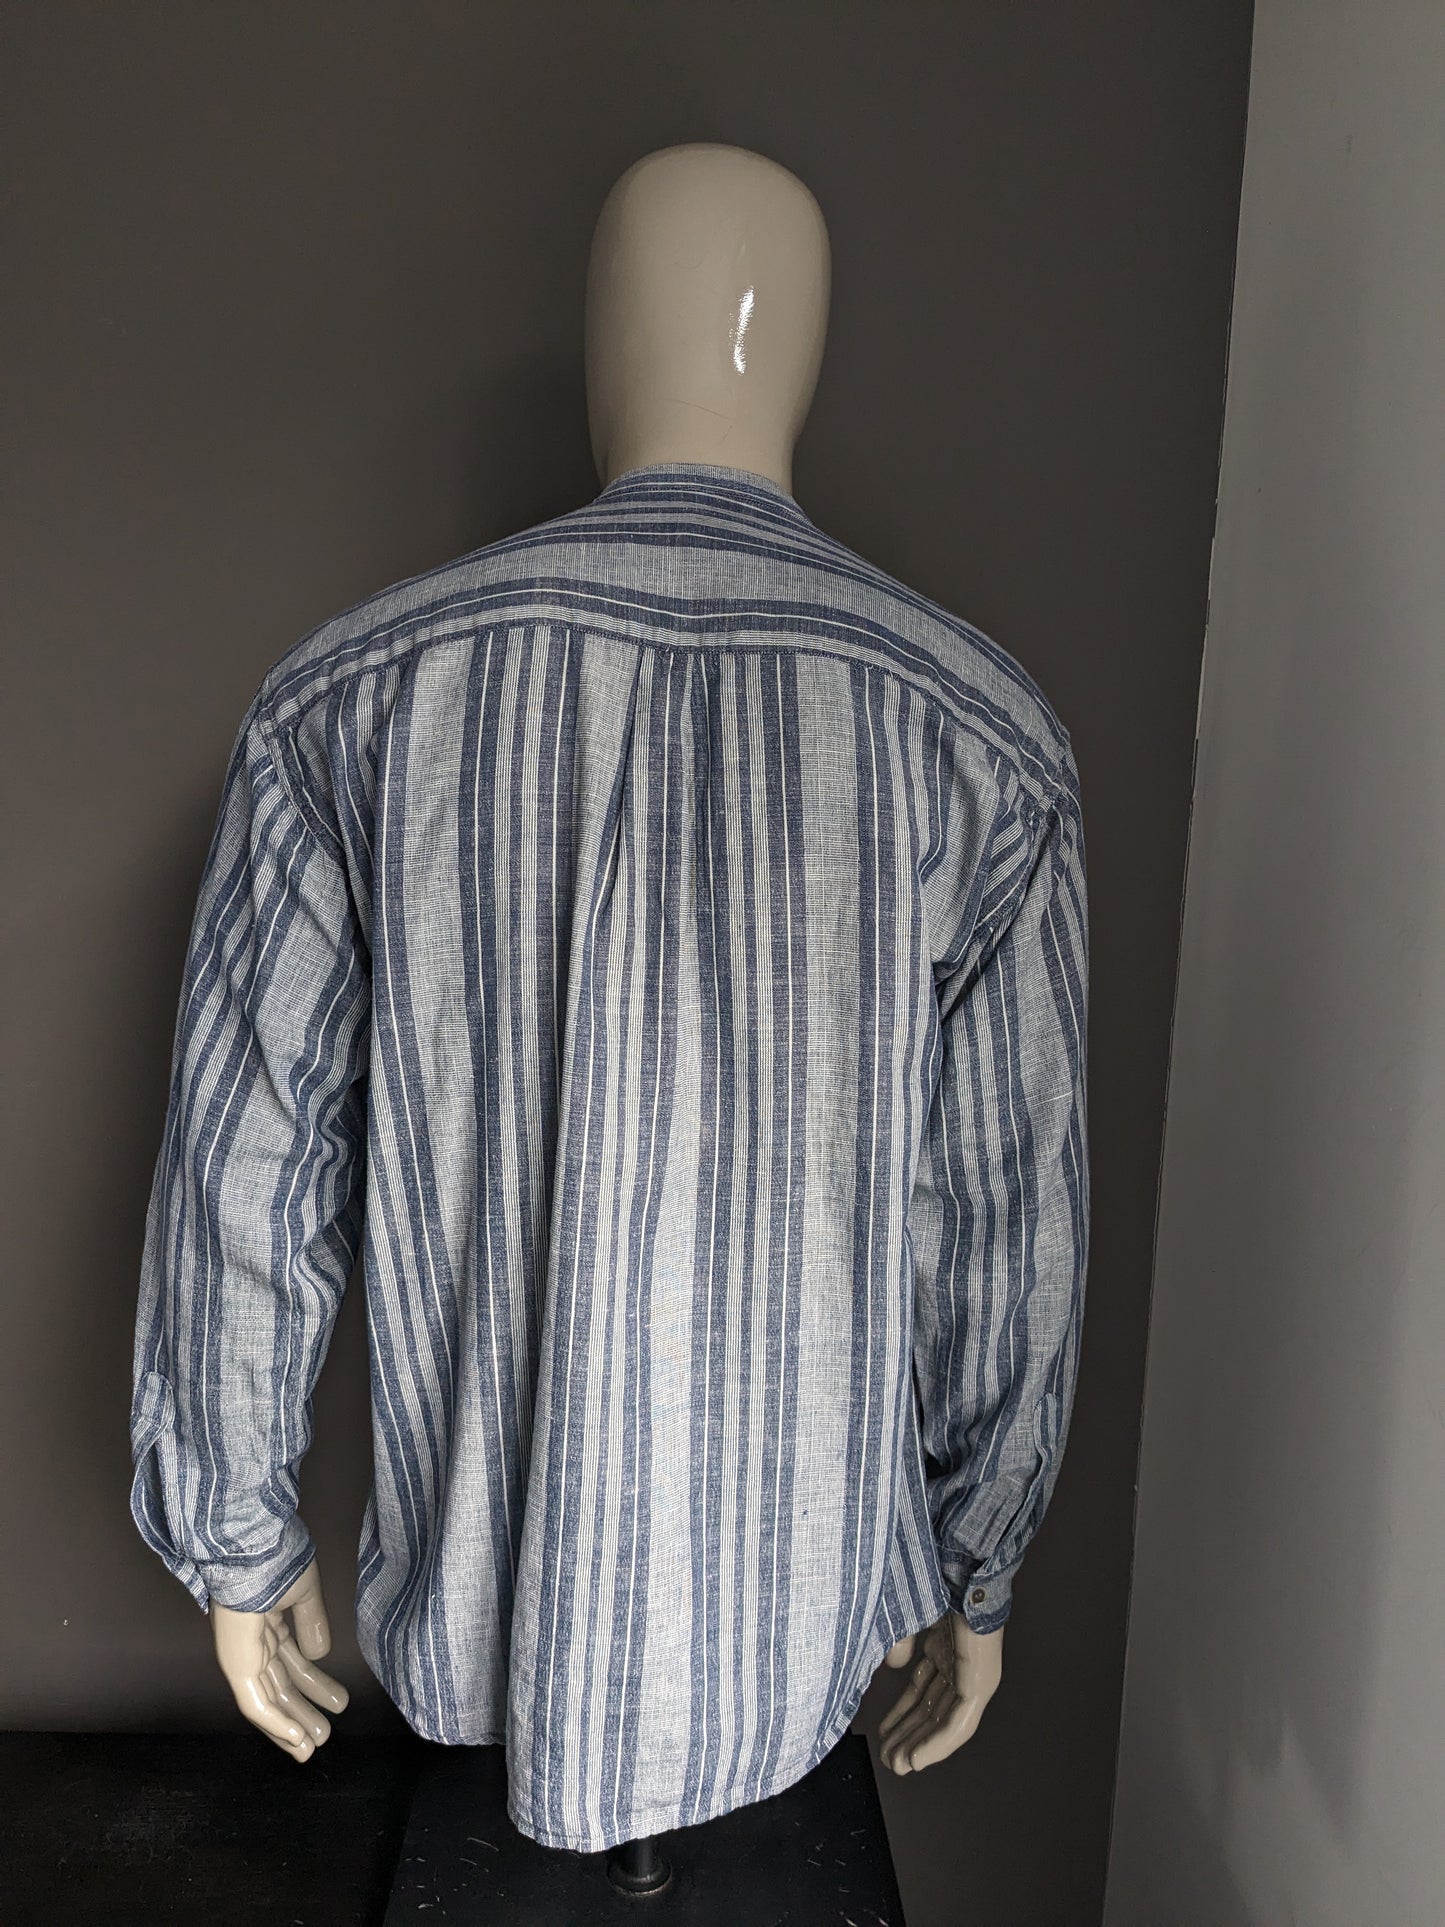 Vintage Casa Blanca shirt upright / farmers / mao collar. Blue gray striped. Size XL.